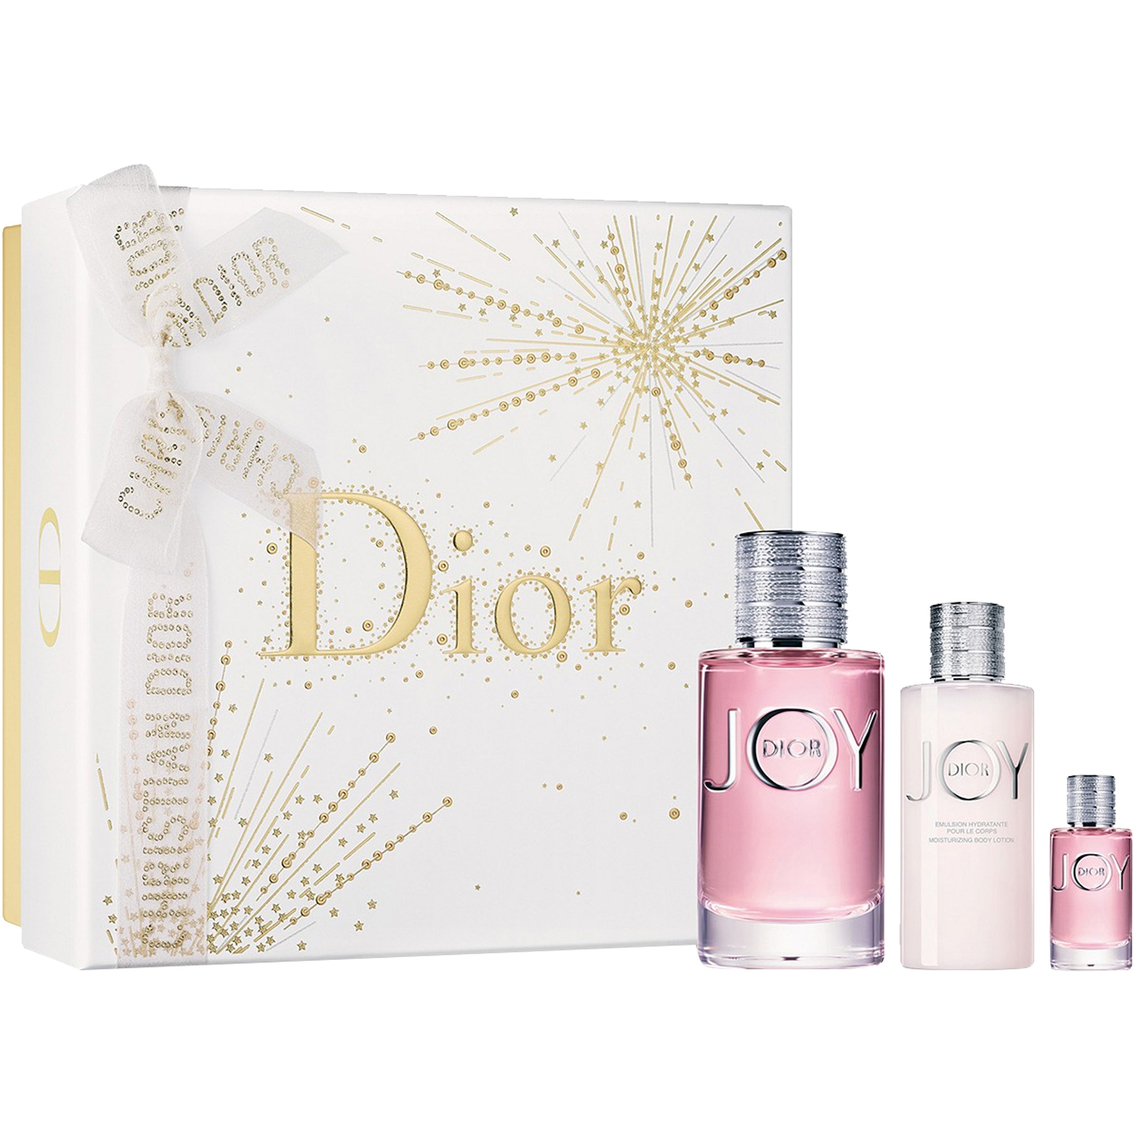 dior joy perfume gift set